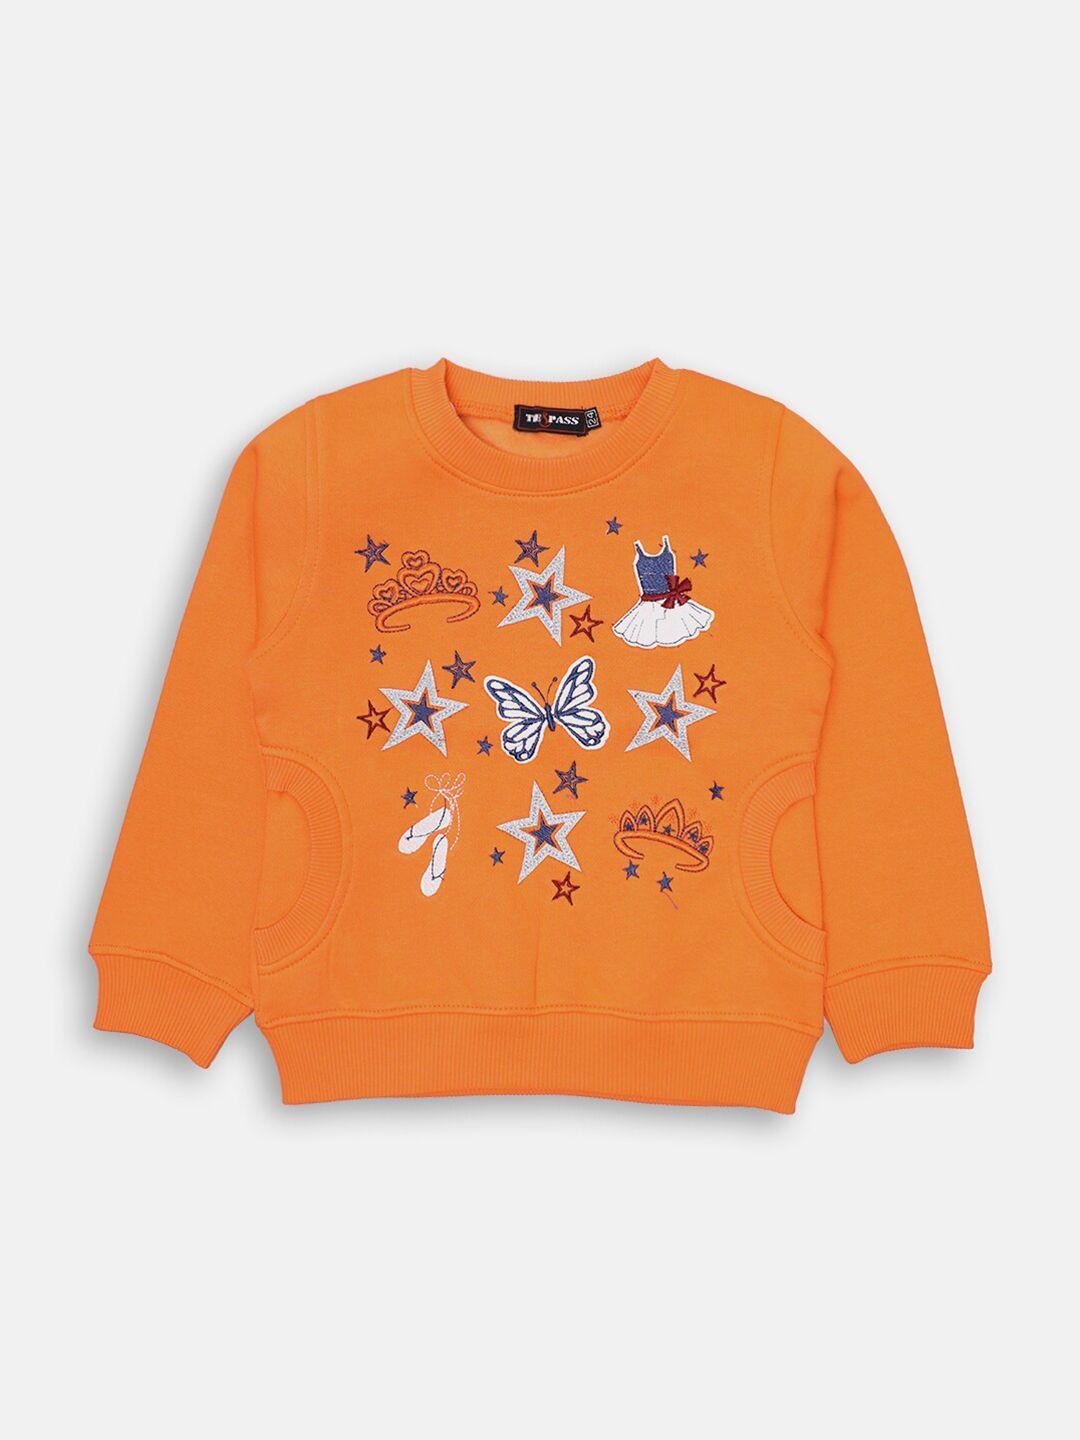 tre&pass boys orange printed cotton sweatshirt